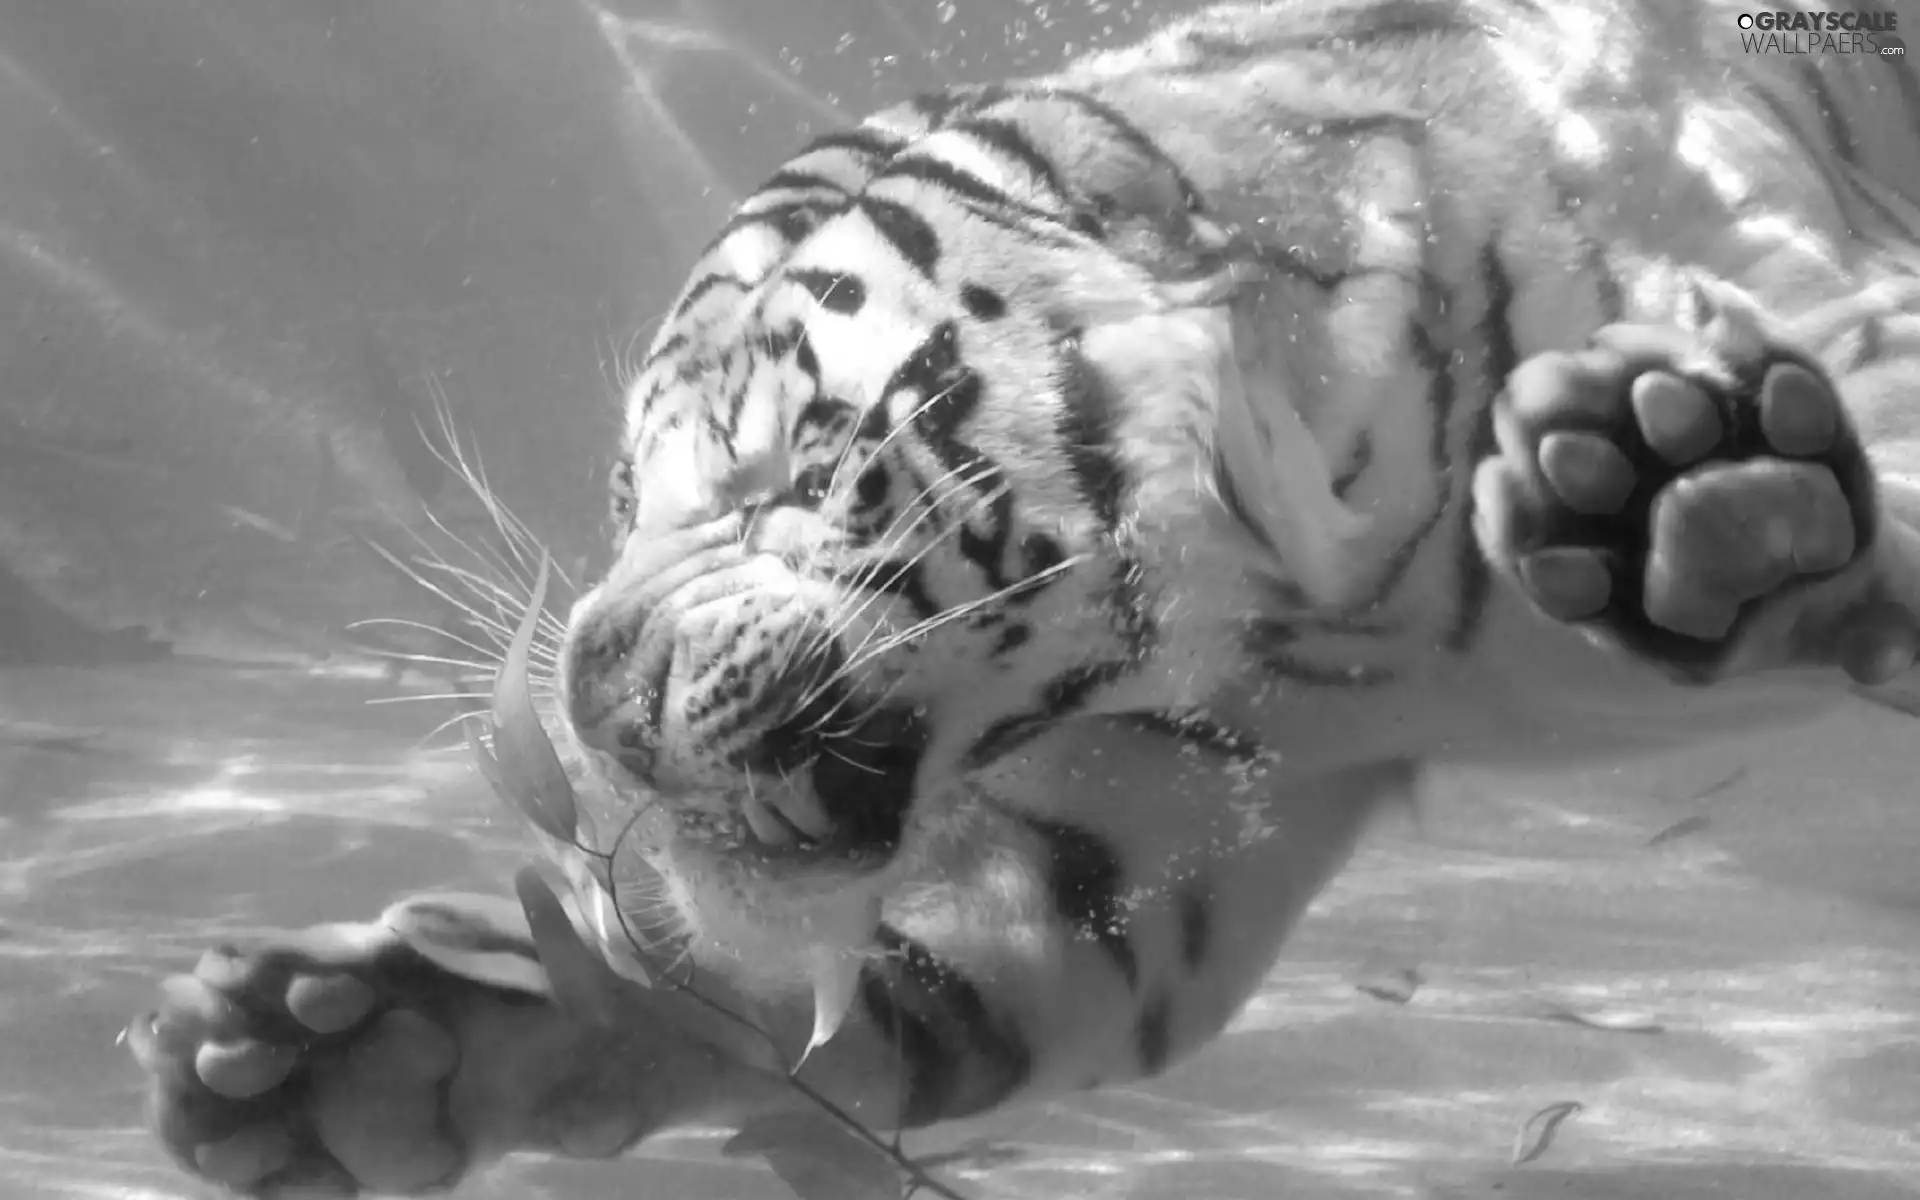 tiger, water, paws, plunger